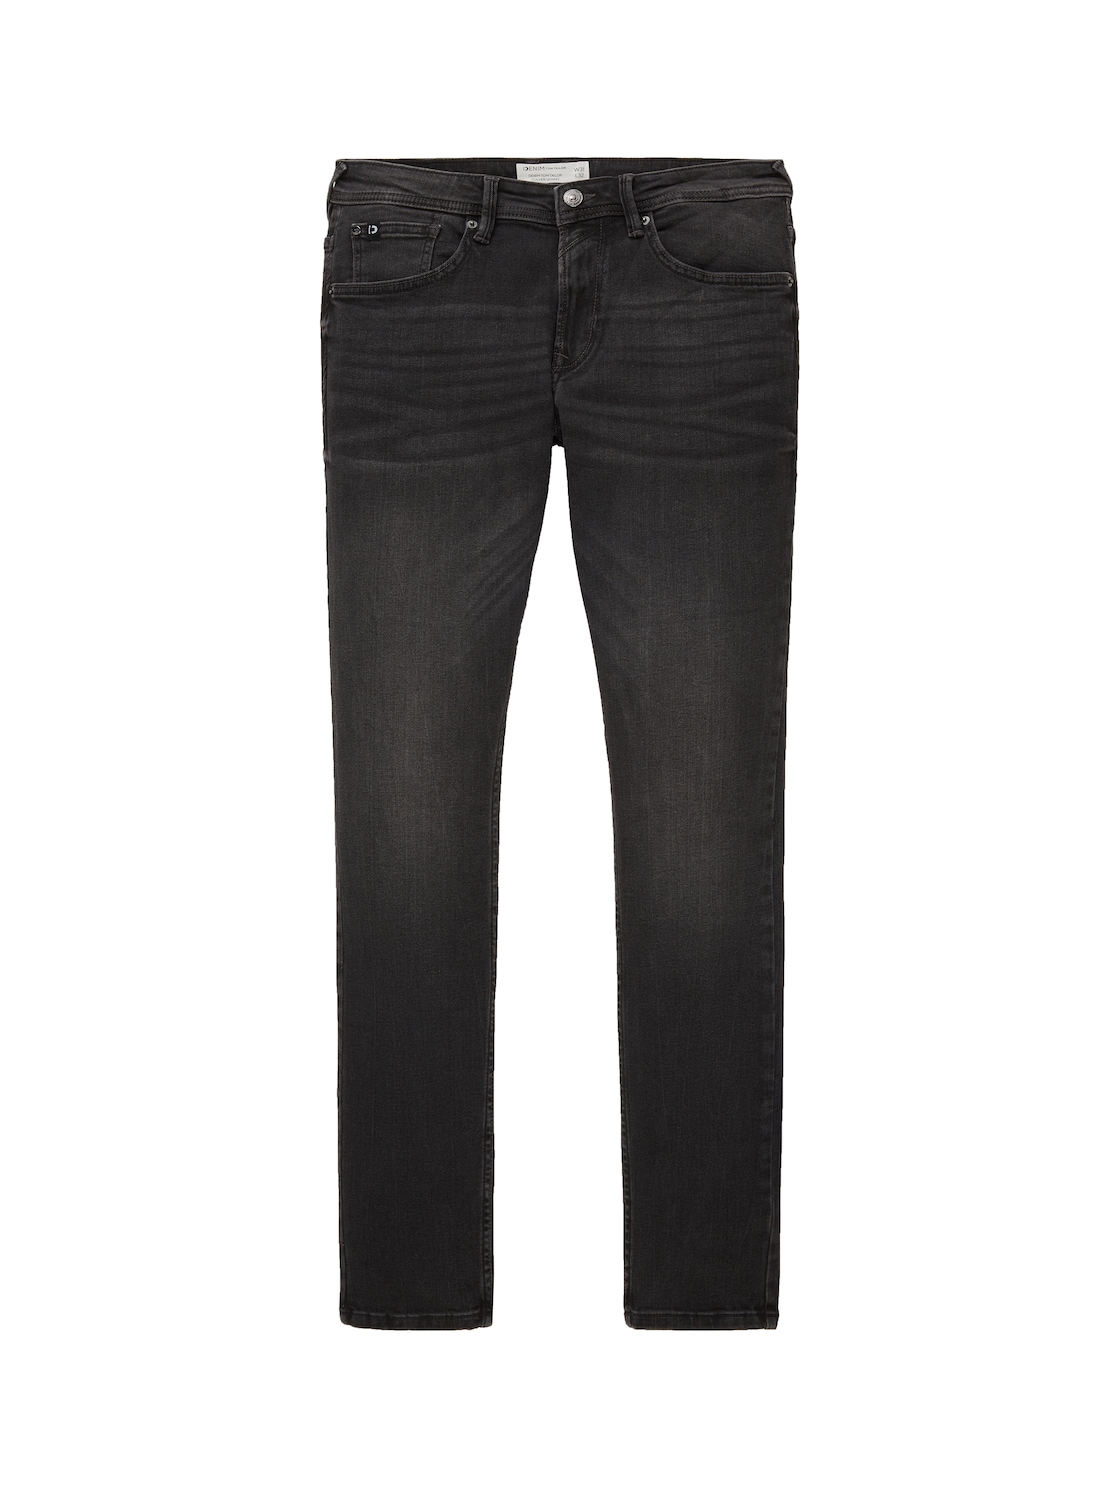 TOM TAILOR DENIM Herren Culver Skinny Jeans, schwarz, Logo Print, Gr. 31/34 von Tom Tailor Denim